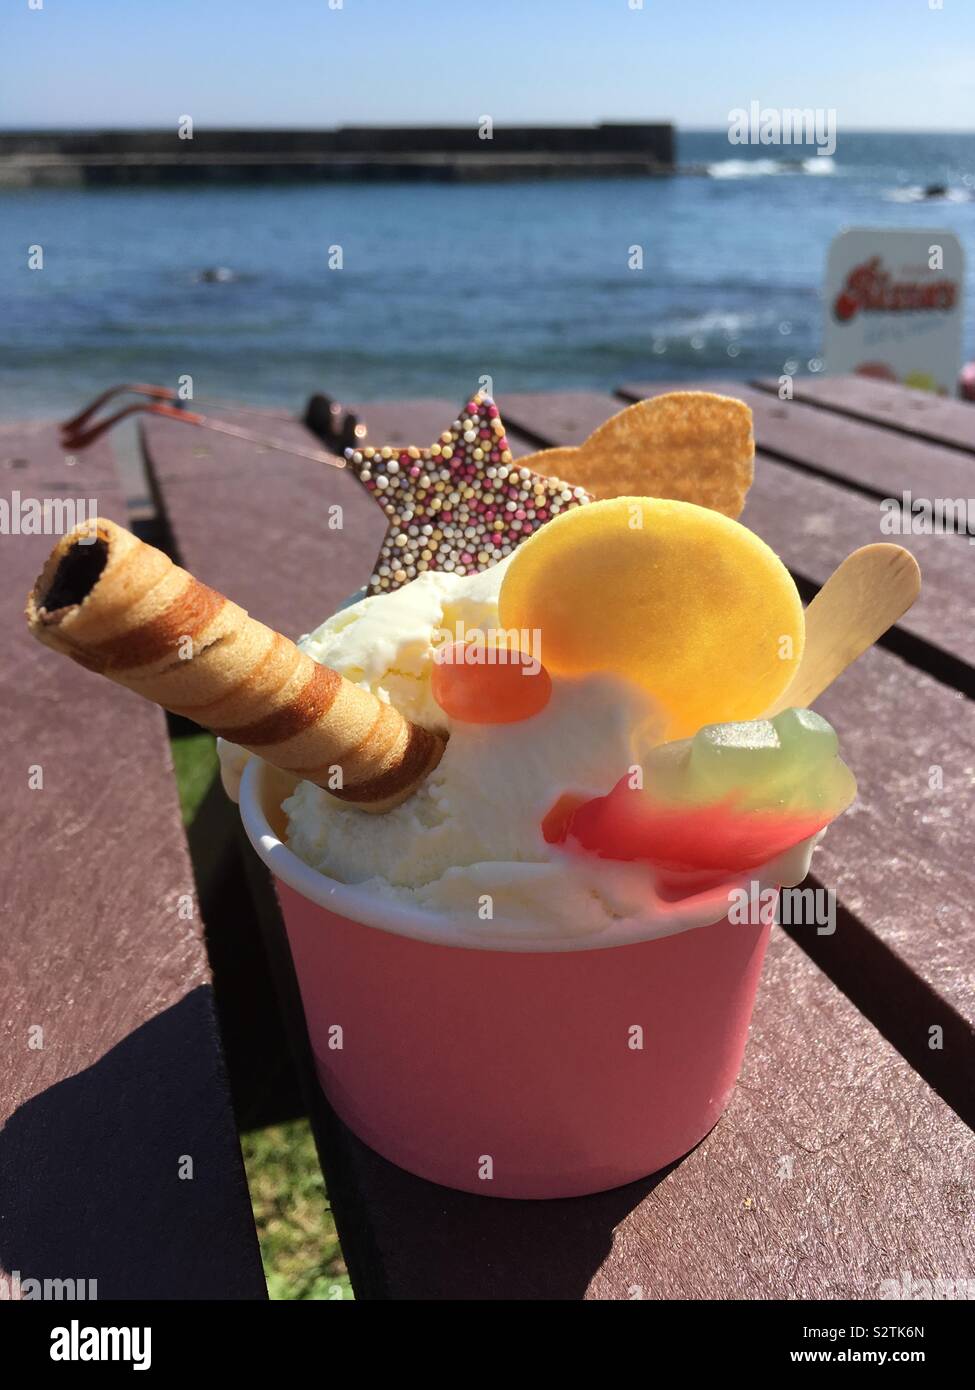 Ice cream tub with sweeties Stock Photo